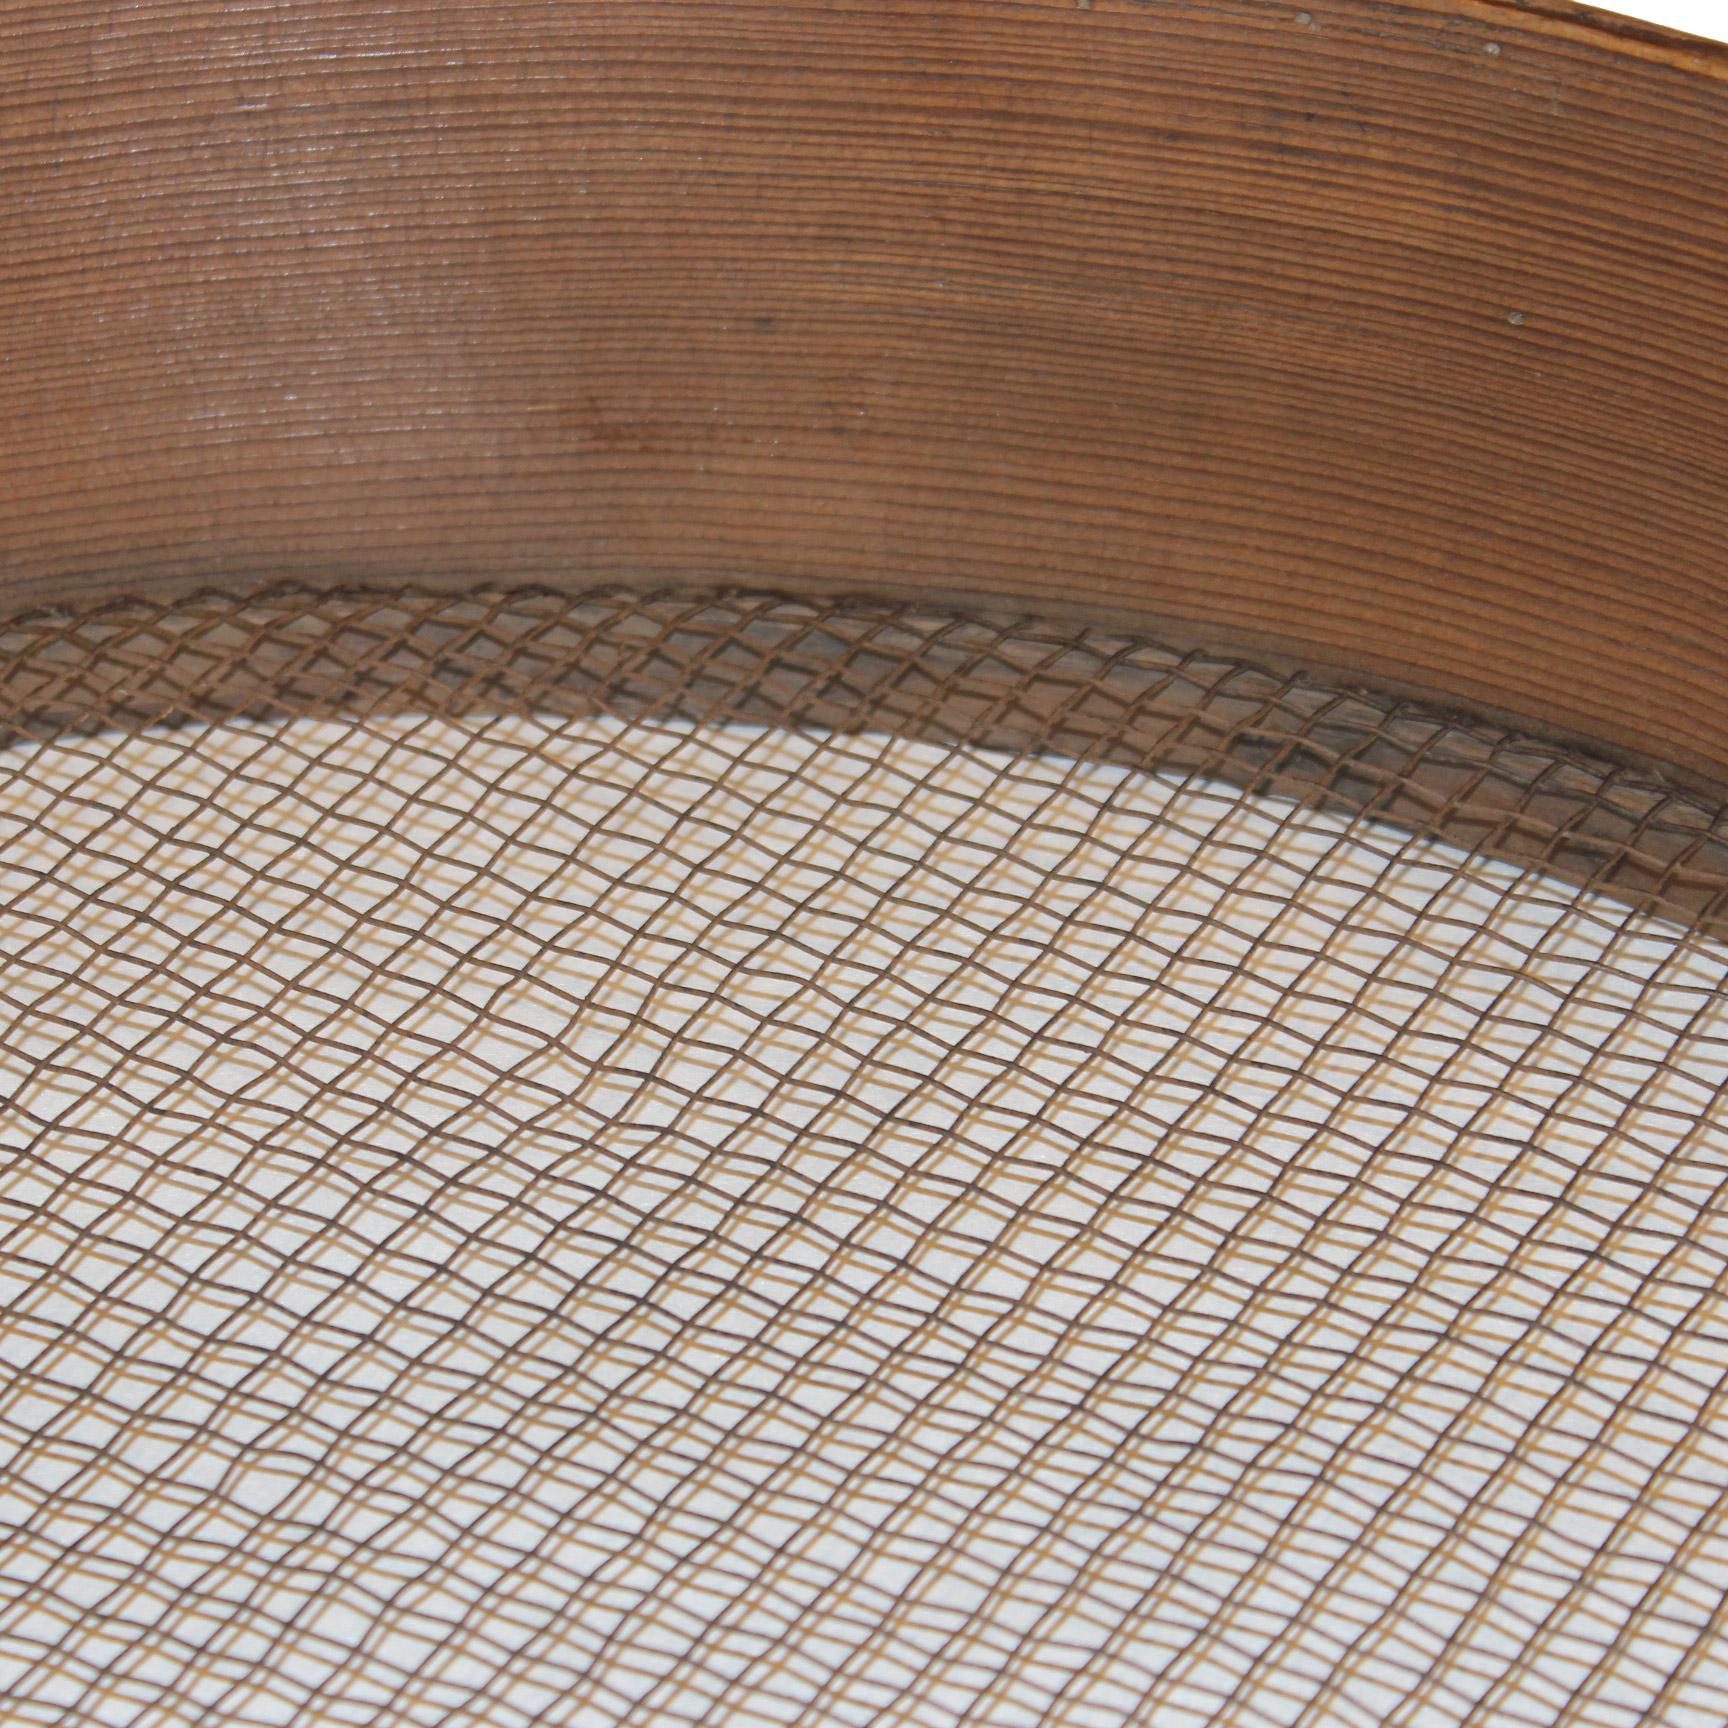 Wood Japanese Grain Basket